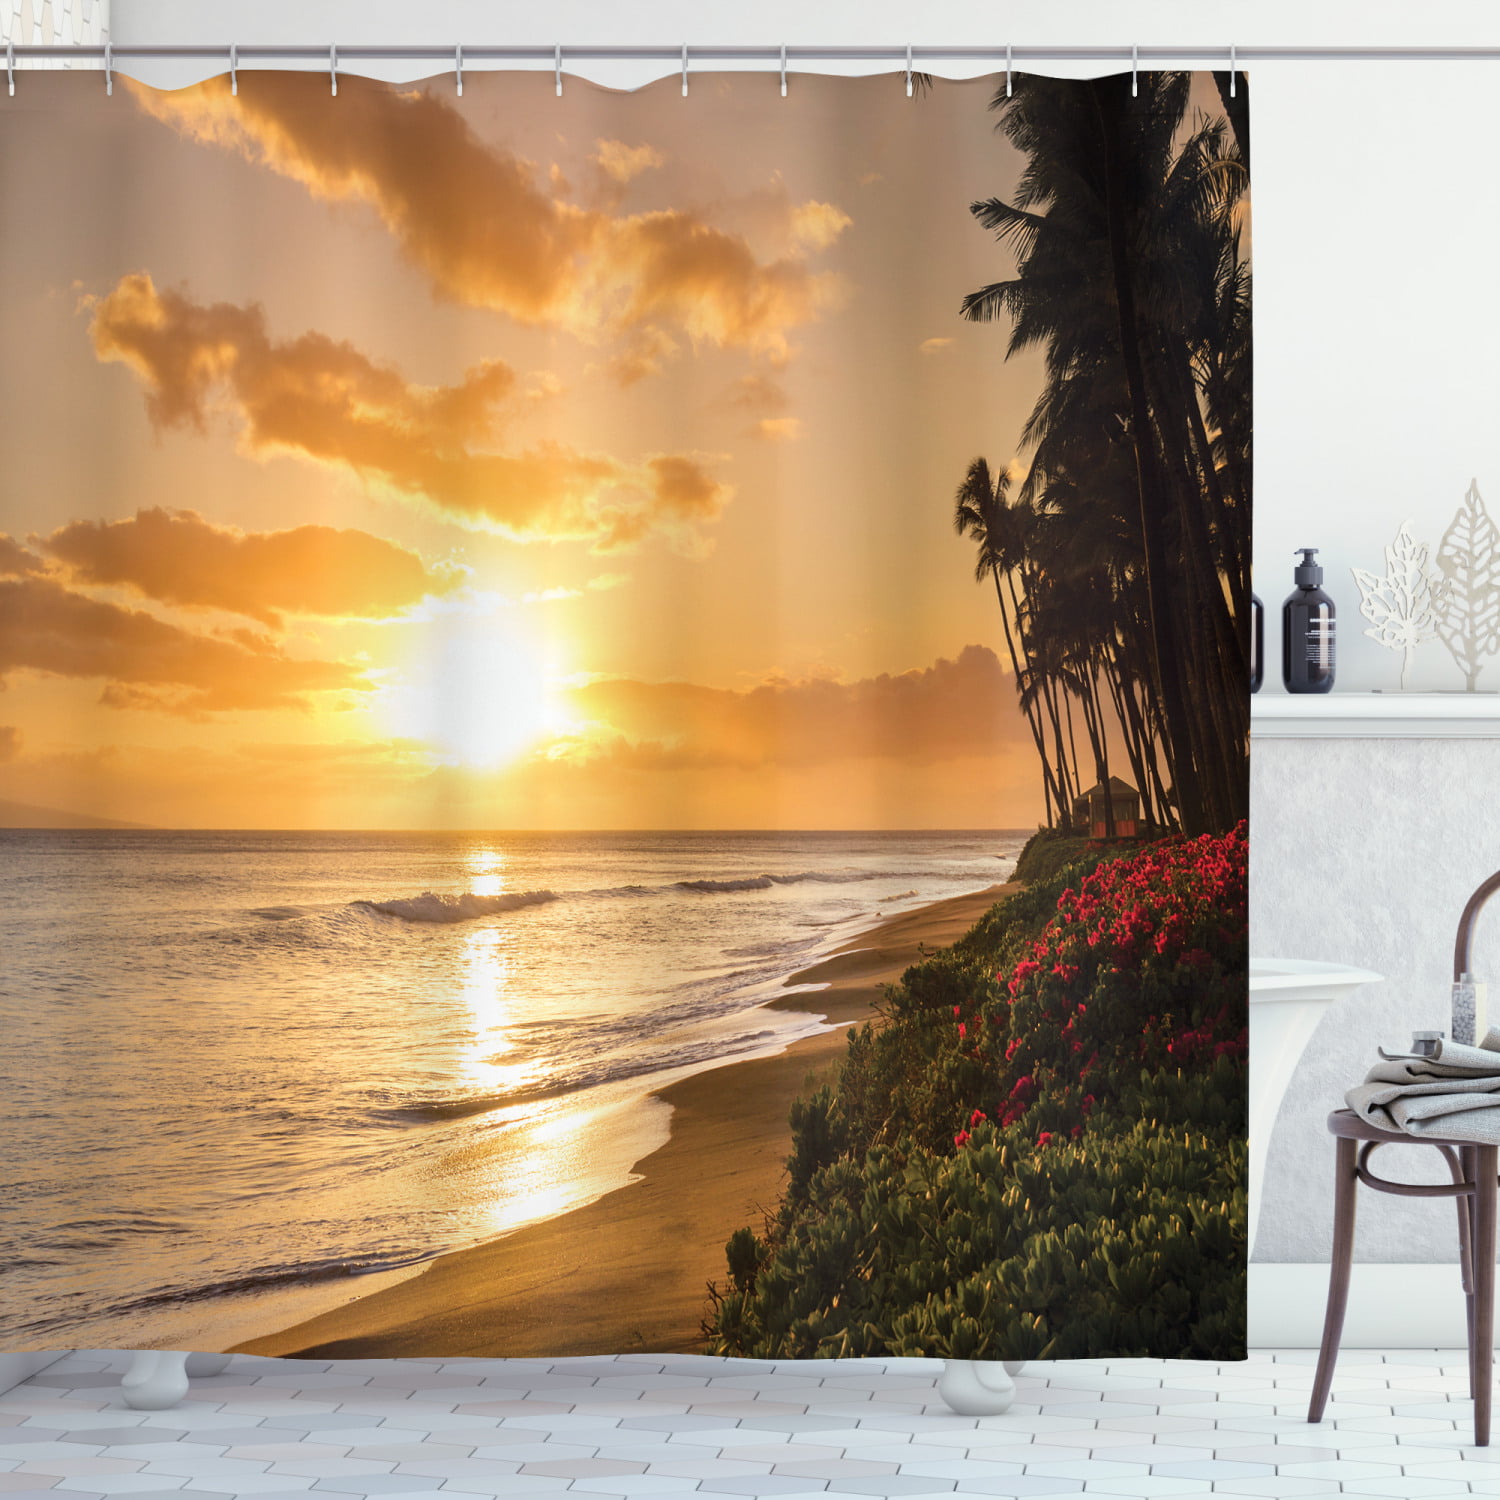 Beach Sunrise at Pacific Hawaiian Shower Curtain Bathroom Fabric & 12hooks new 